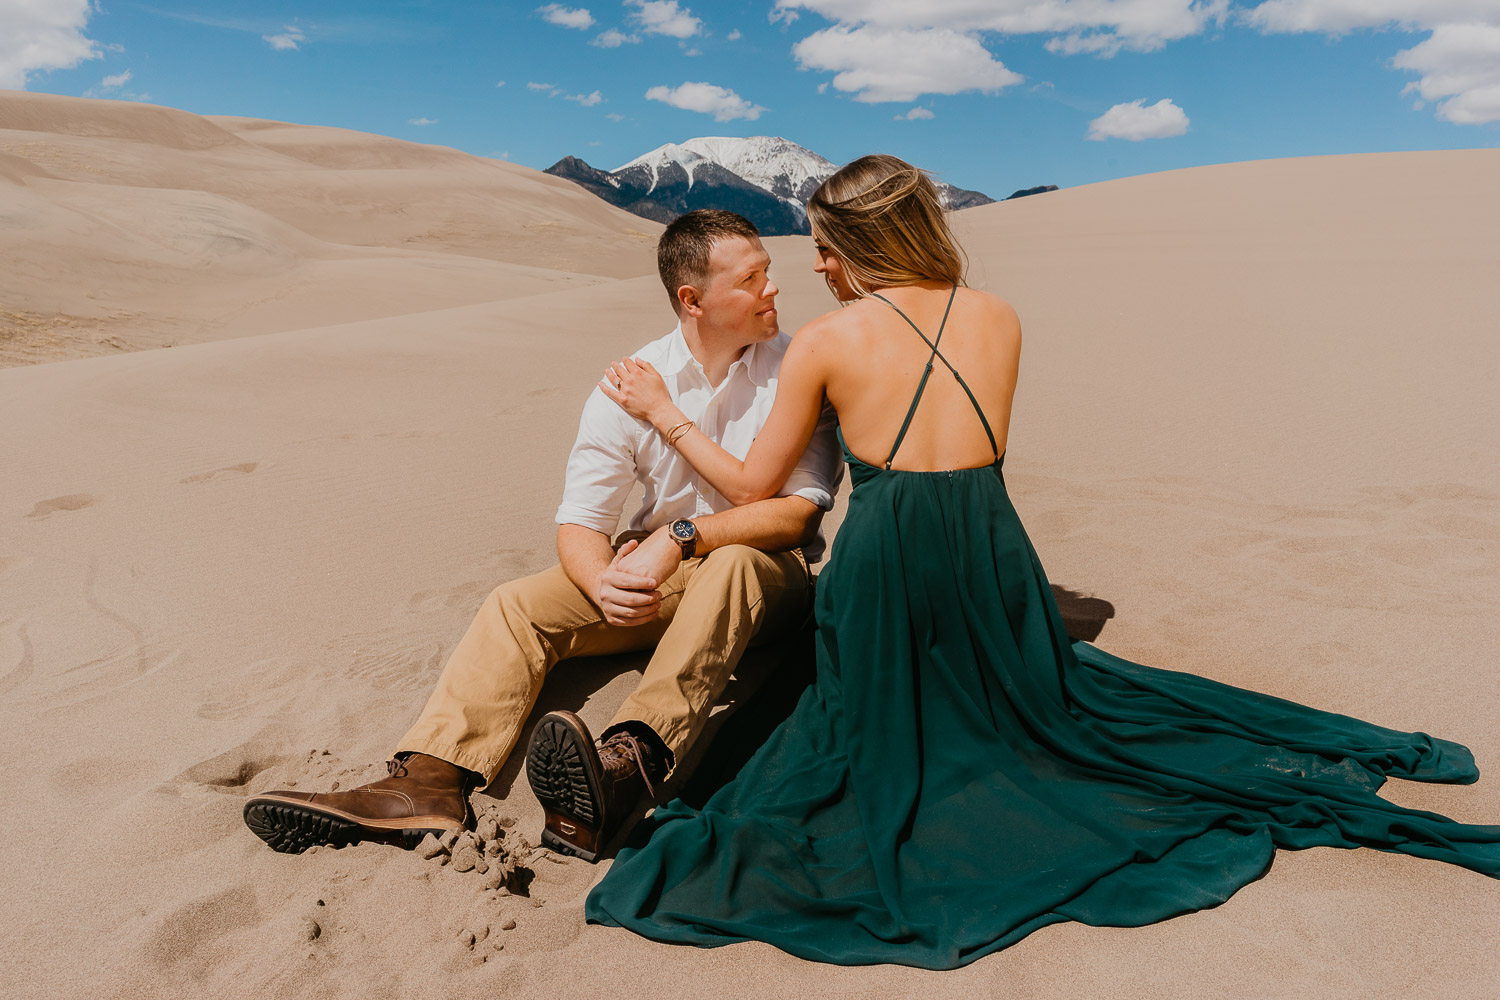 Colorado Engagement Photography, Great Sand Dunes National Park, Adventure Couple Photography, Colorado Elopement Photography, 